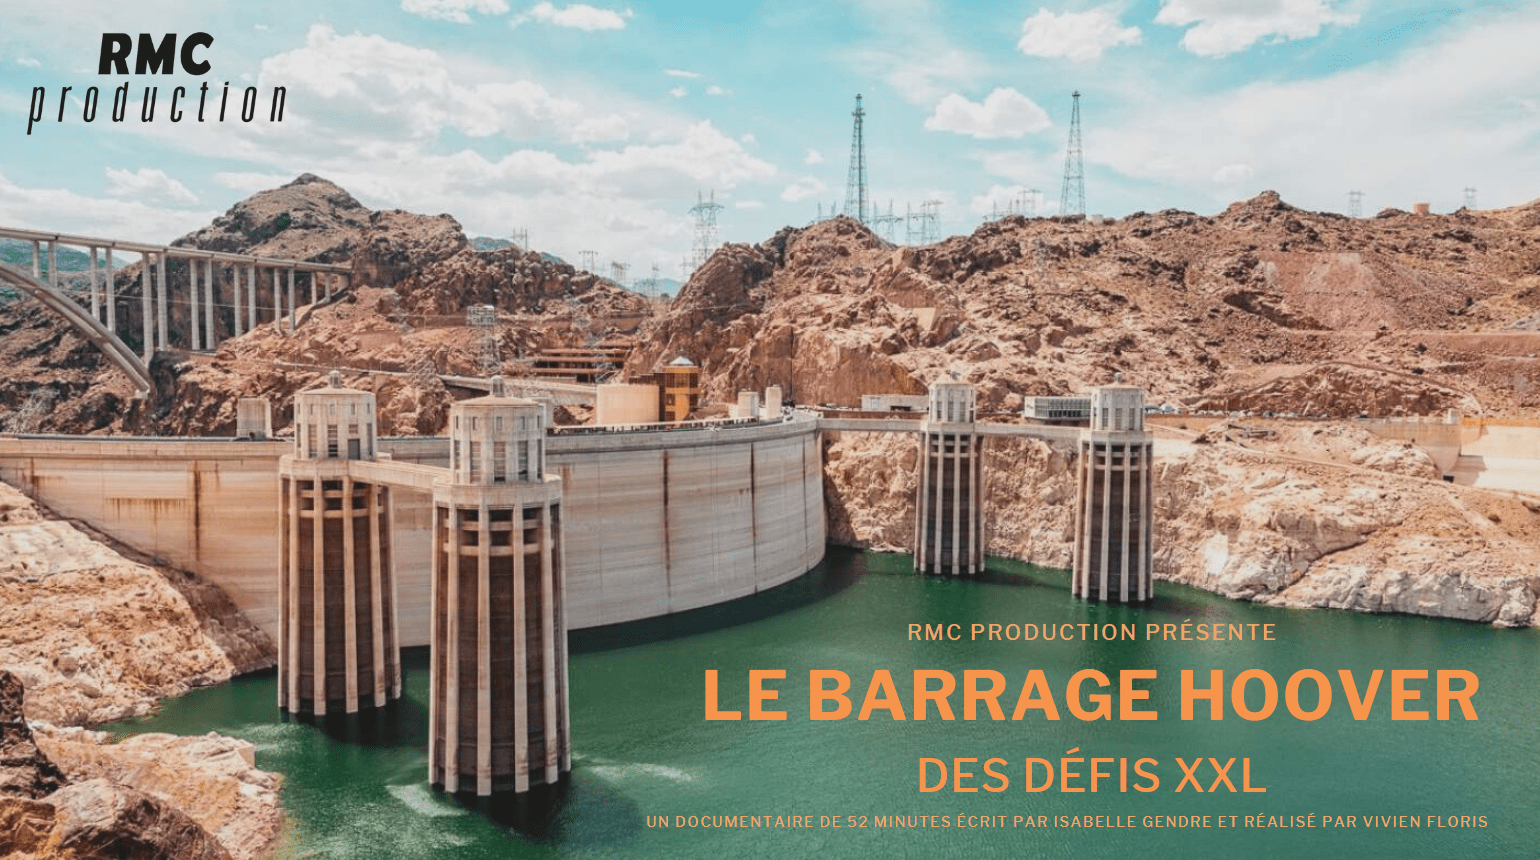 HOOVER: Le barrage XXL qui illumine Las Vegas